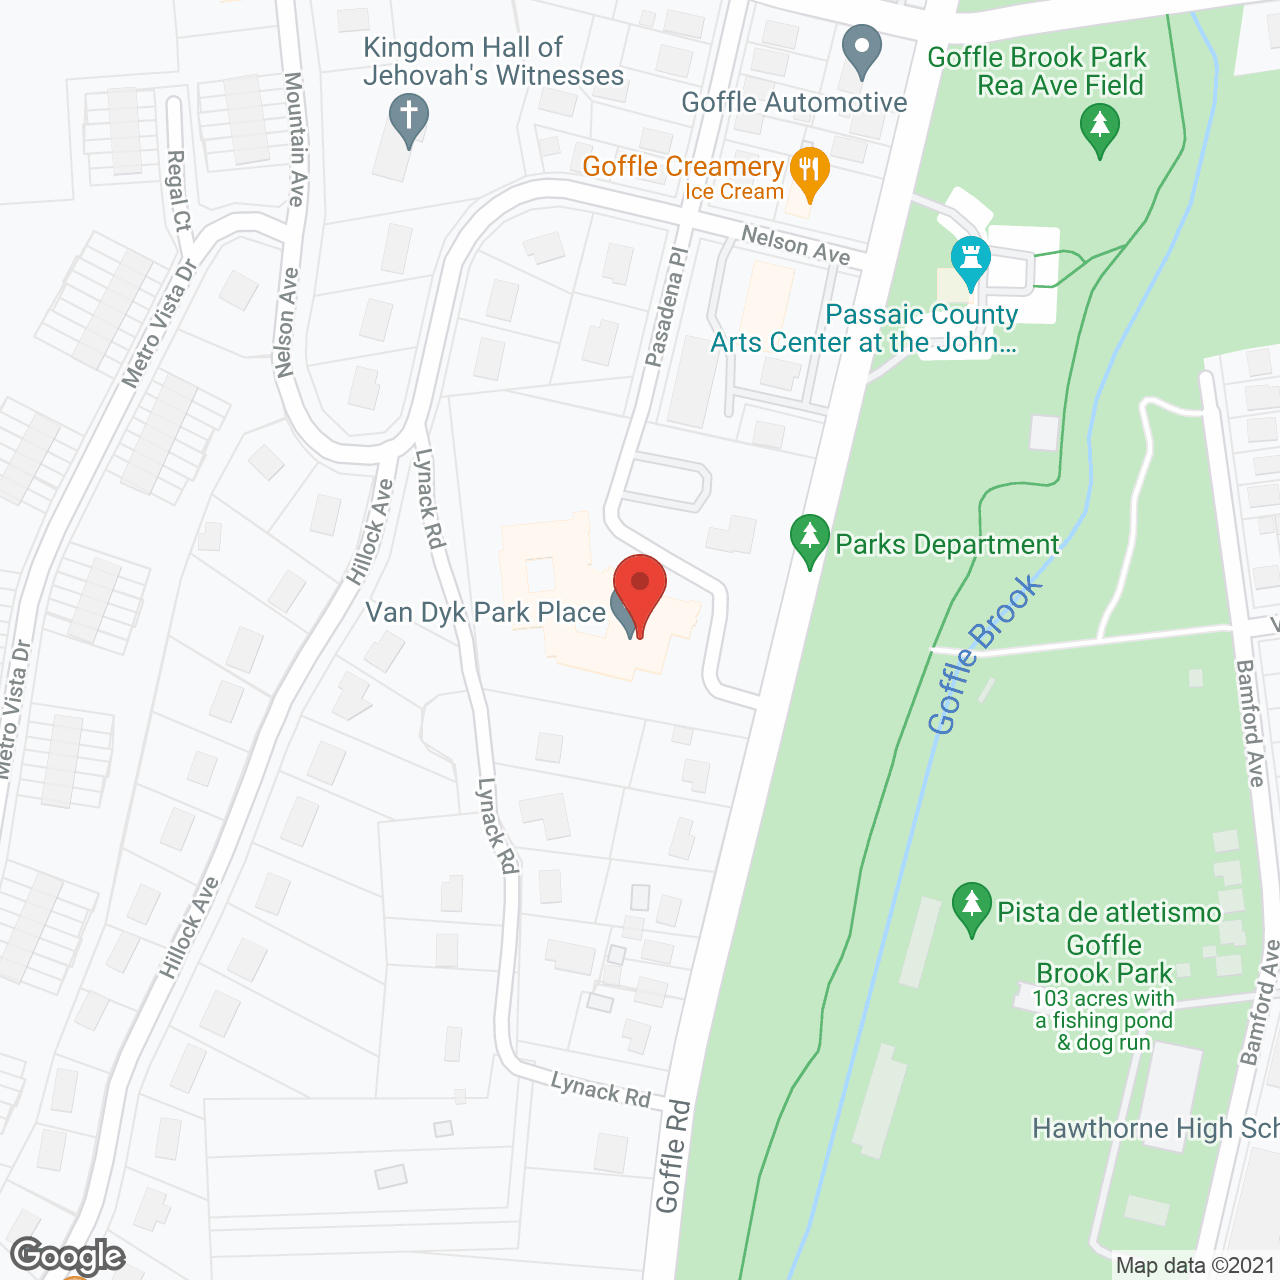 Van Dyk Park Place in google map